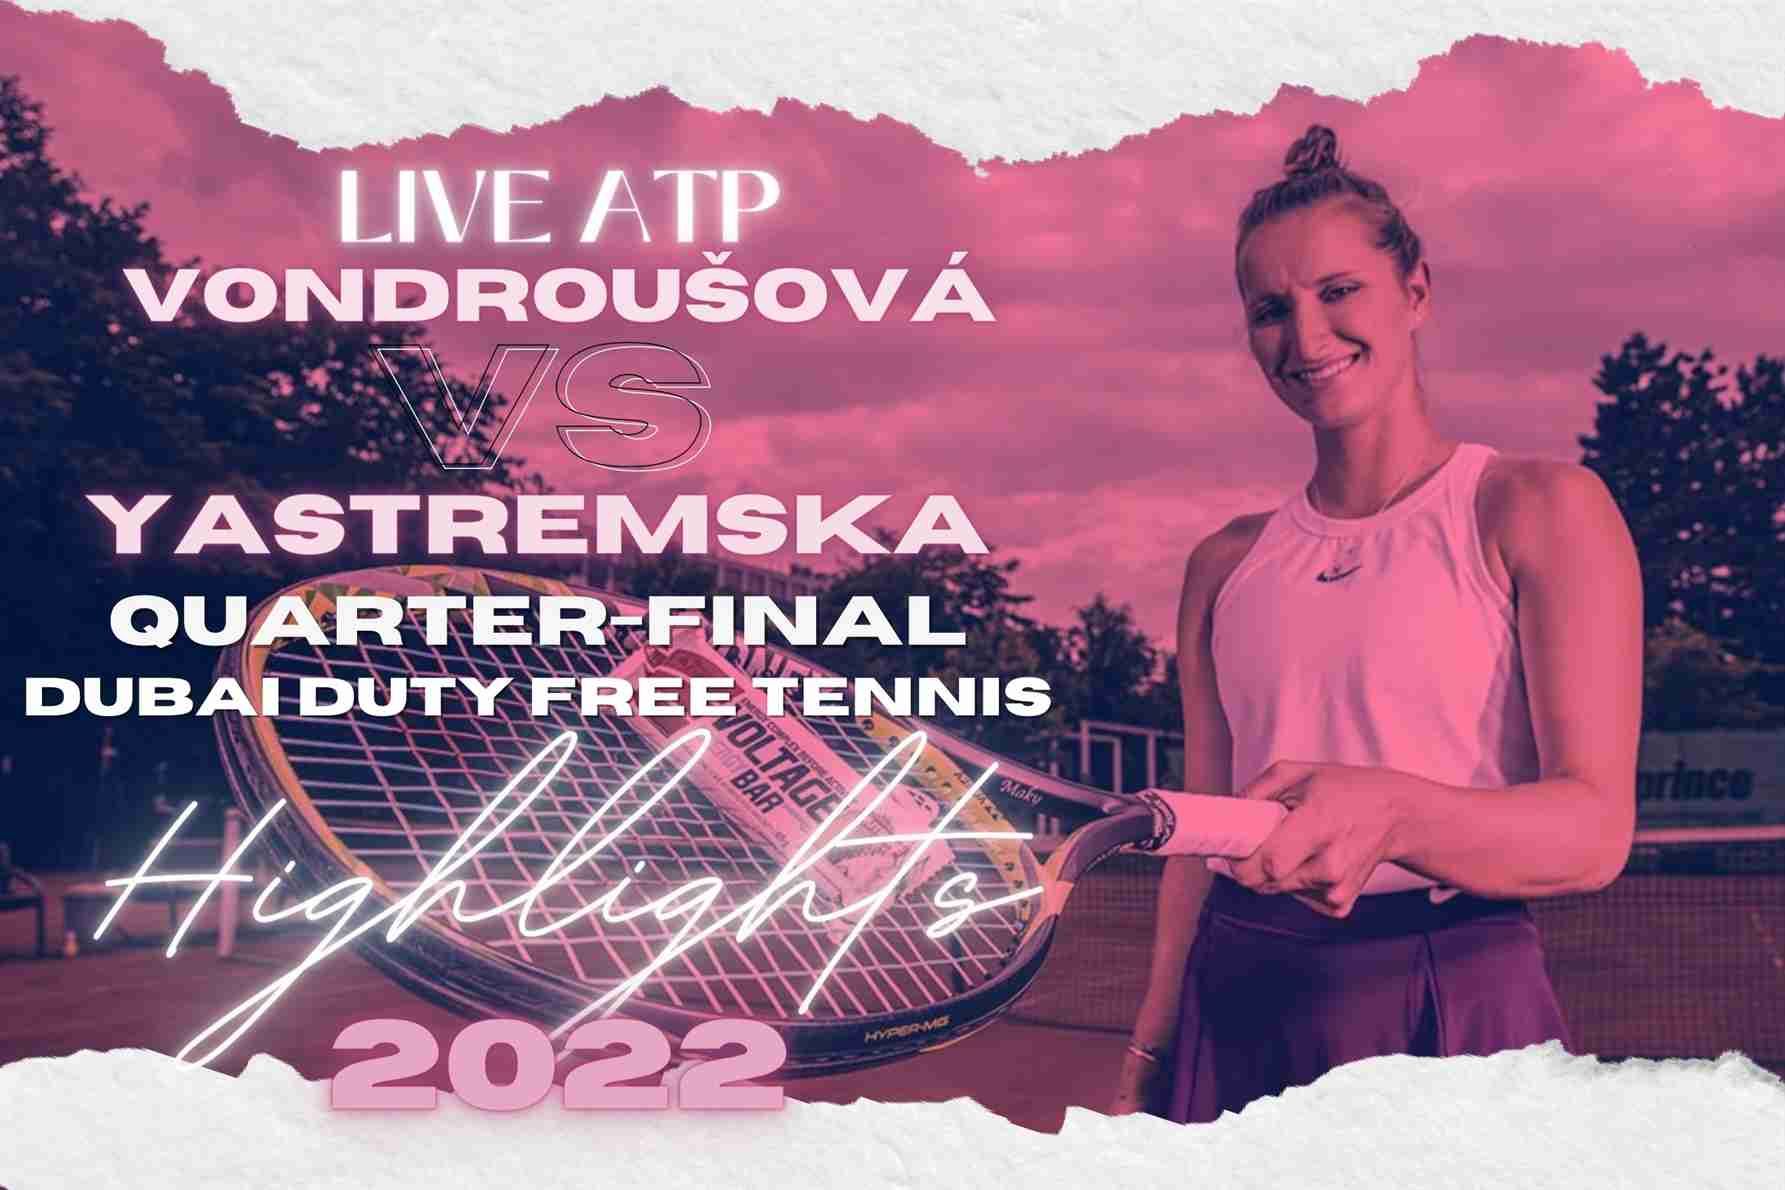 Vondrousova Vs Yastremska Quarterfinal 2022 Highlights